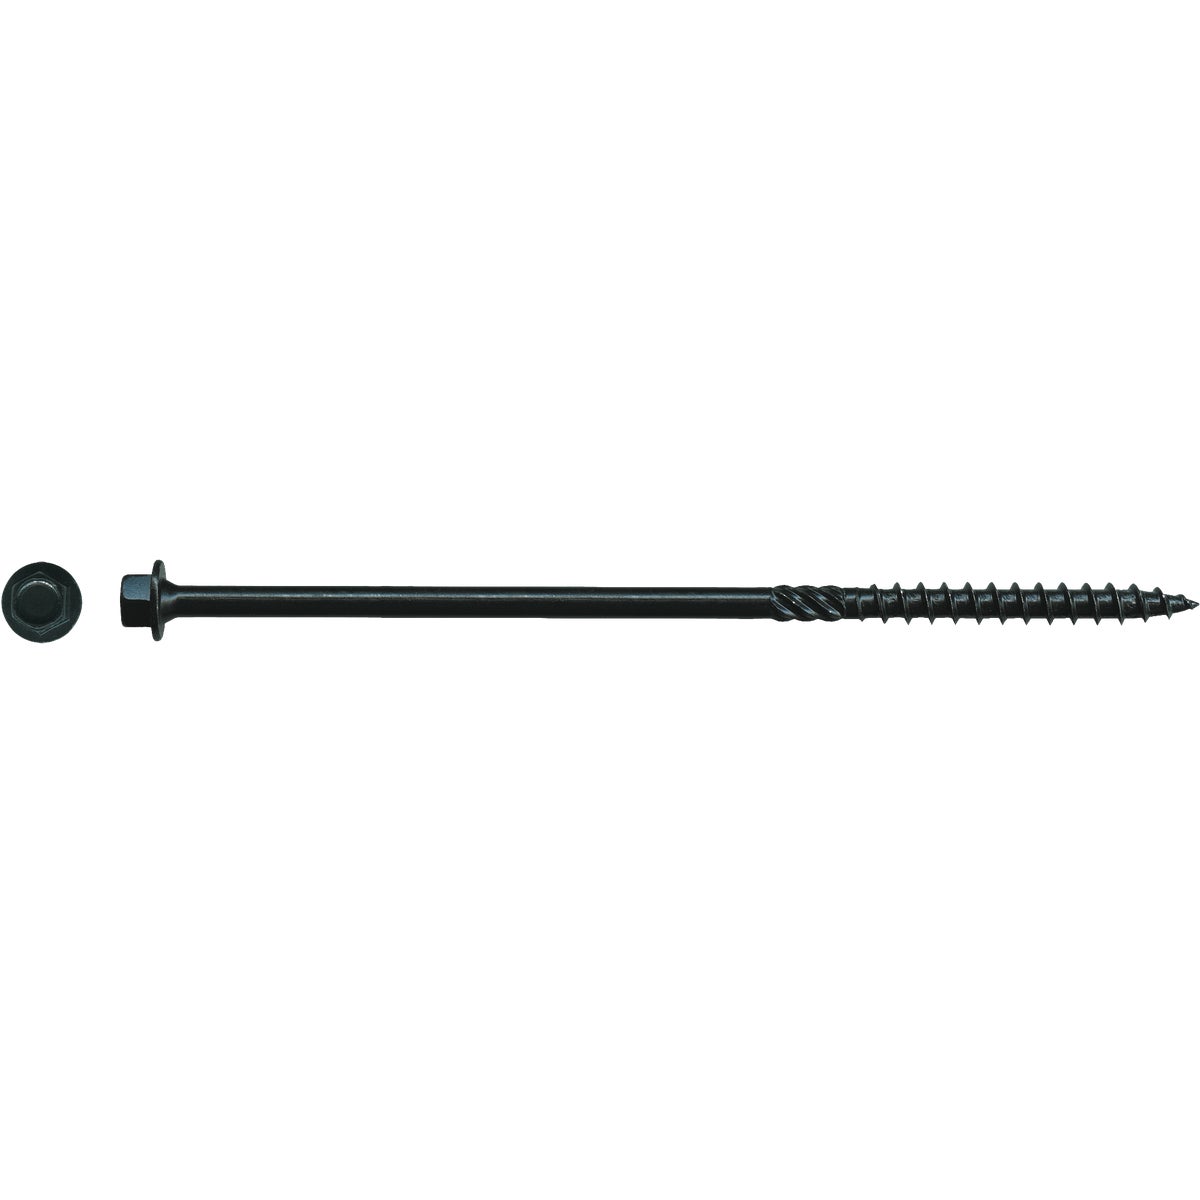 Item 201403, Black Log hex head screws are great for decks, framing, log homes, 